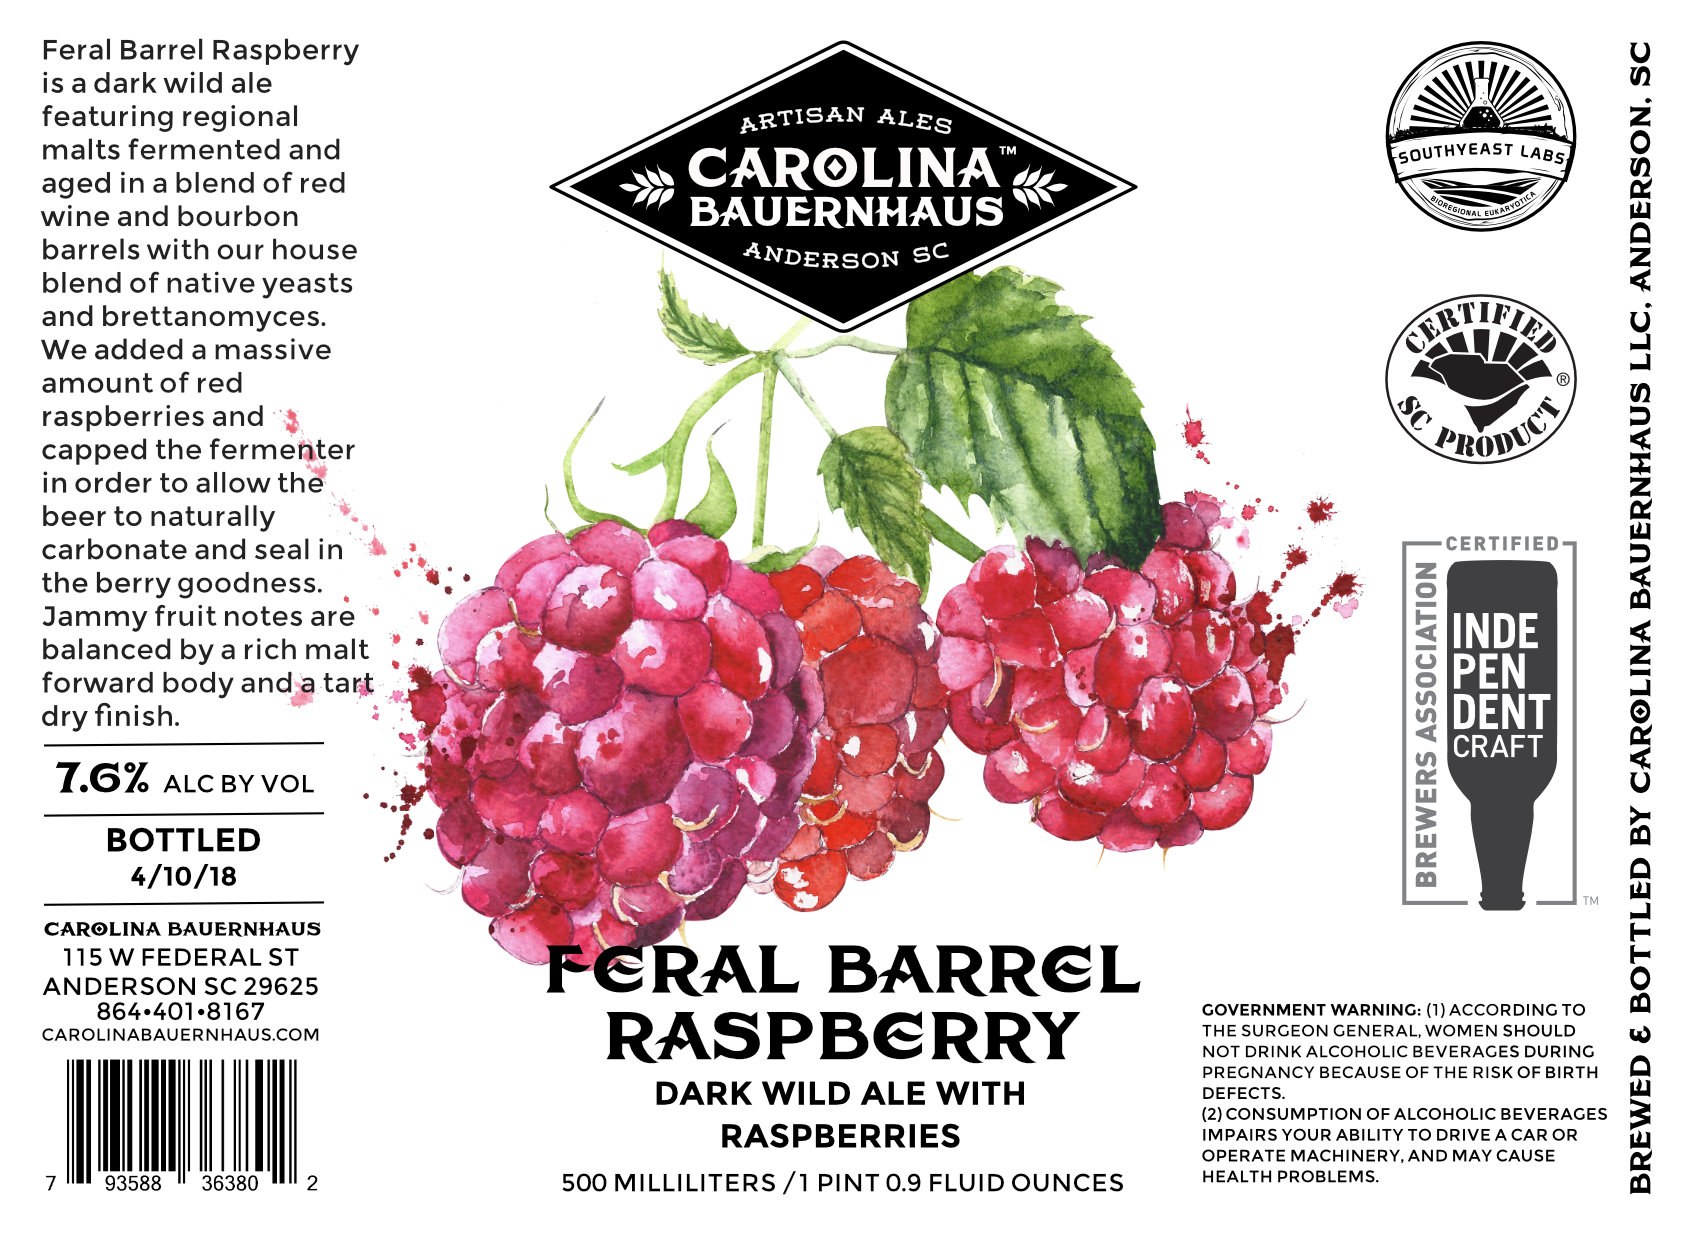 Feral Barrel Raspberry